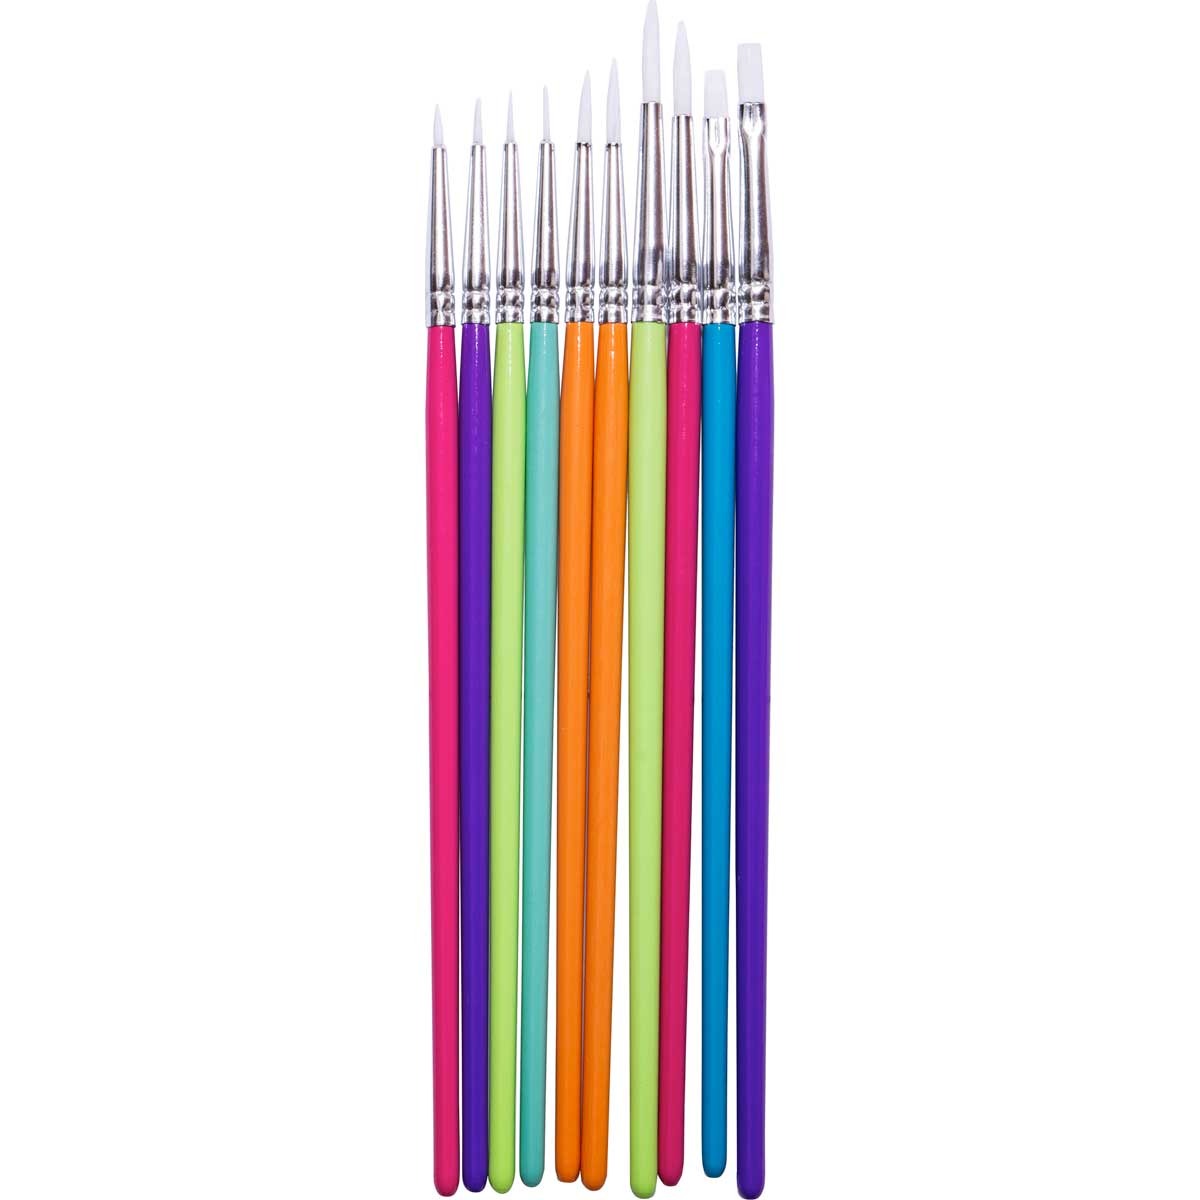 Plaid ® Color By Me™ Brush Sets - Detail Brushes, 10 pc. - 4928E